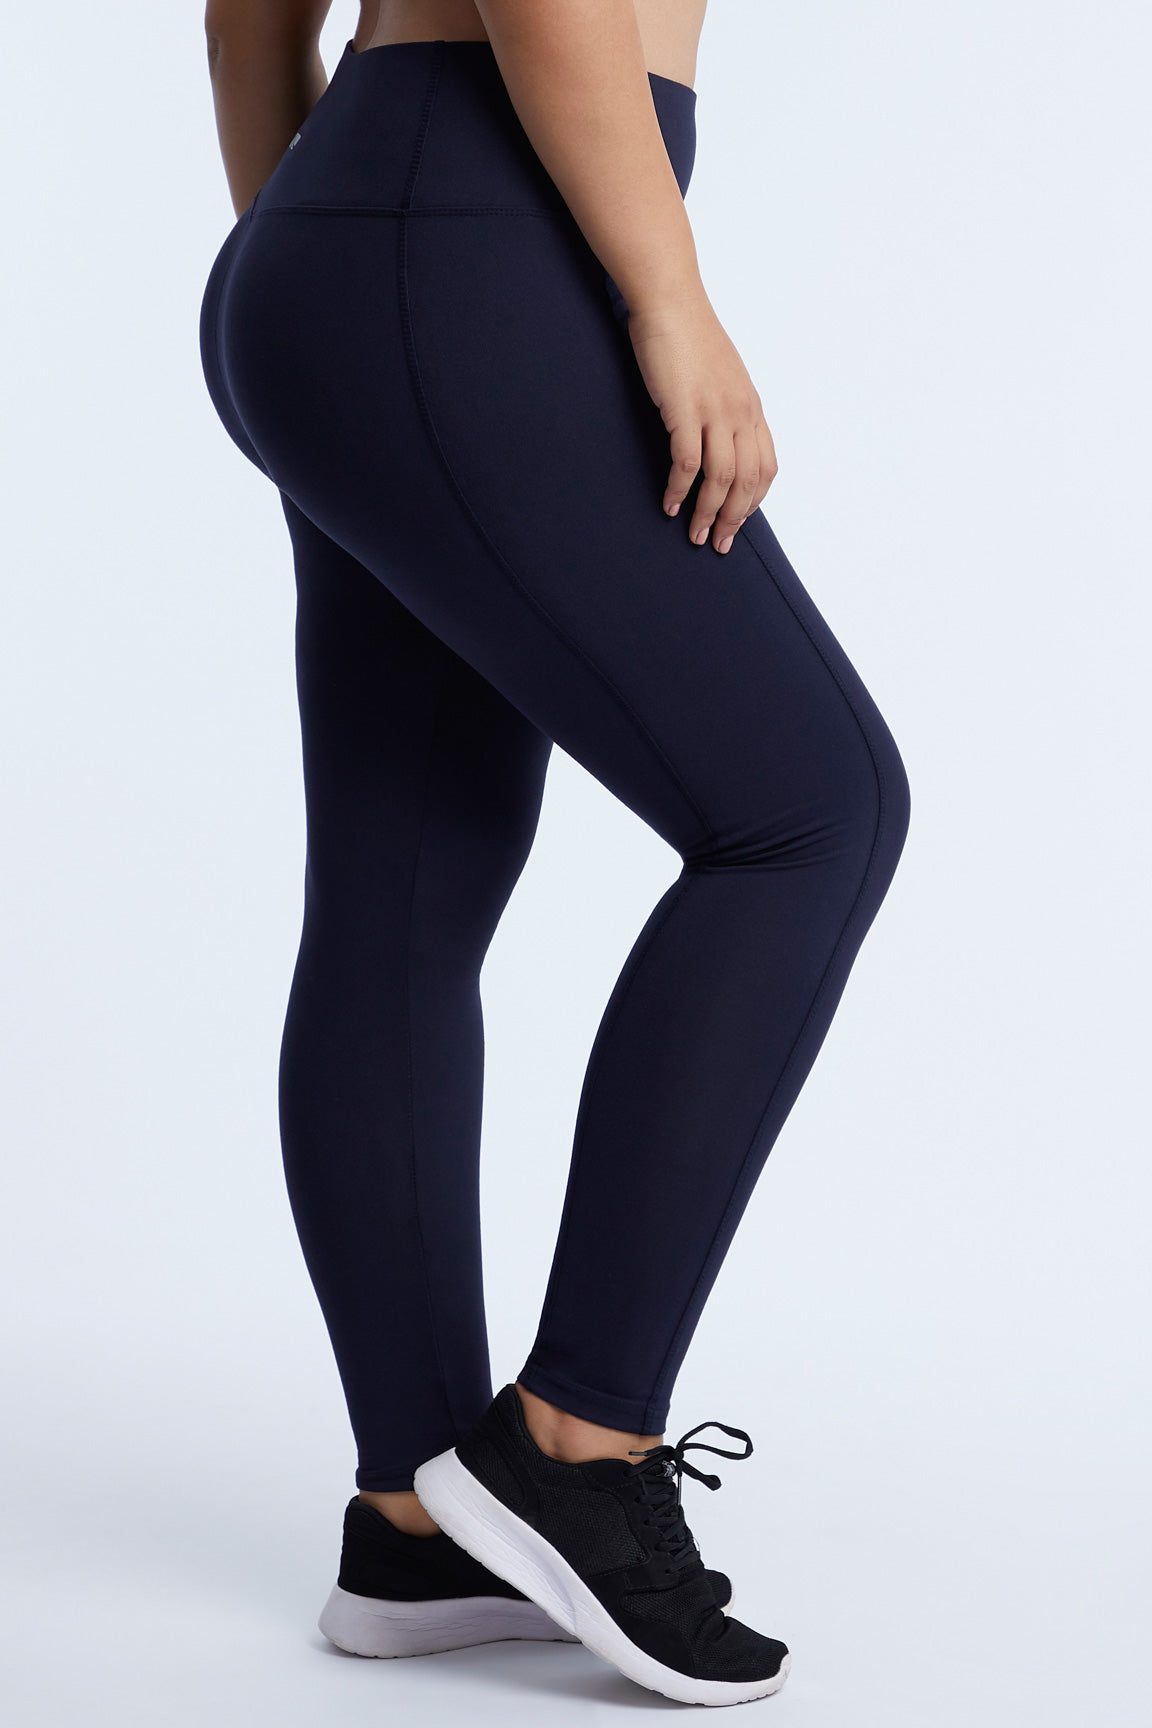 JWZUY Women Plus Size Yoga Leggings Fashion Legcut Hollow Design Solid High  Waist Tummy Control Capri Pants Stretch Workout Pant 1-Blue XL